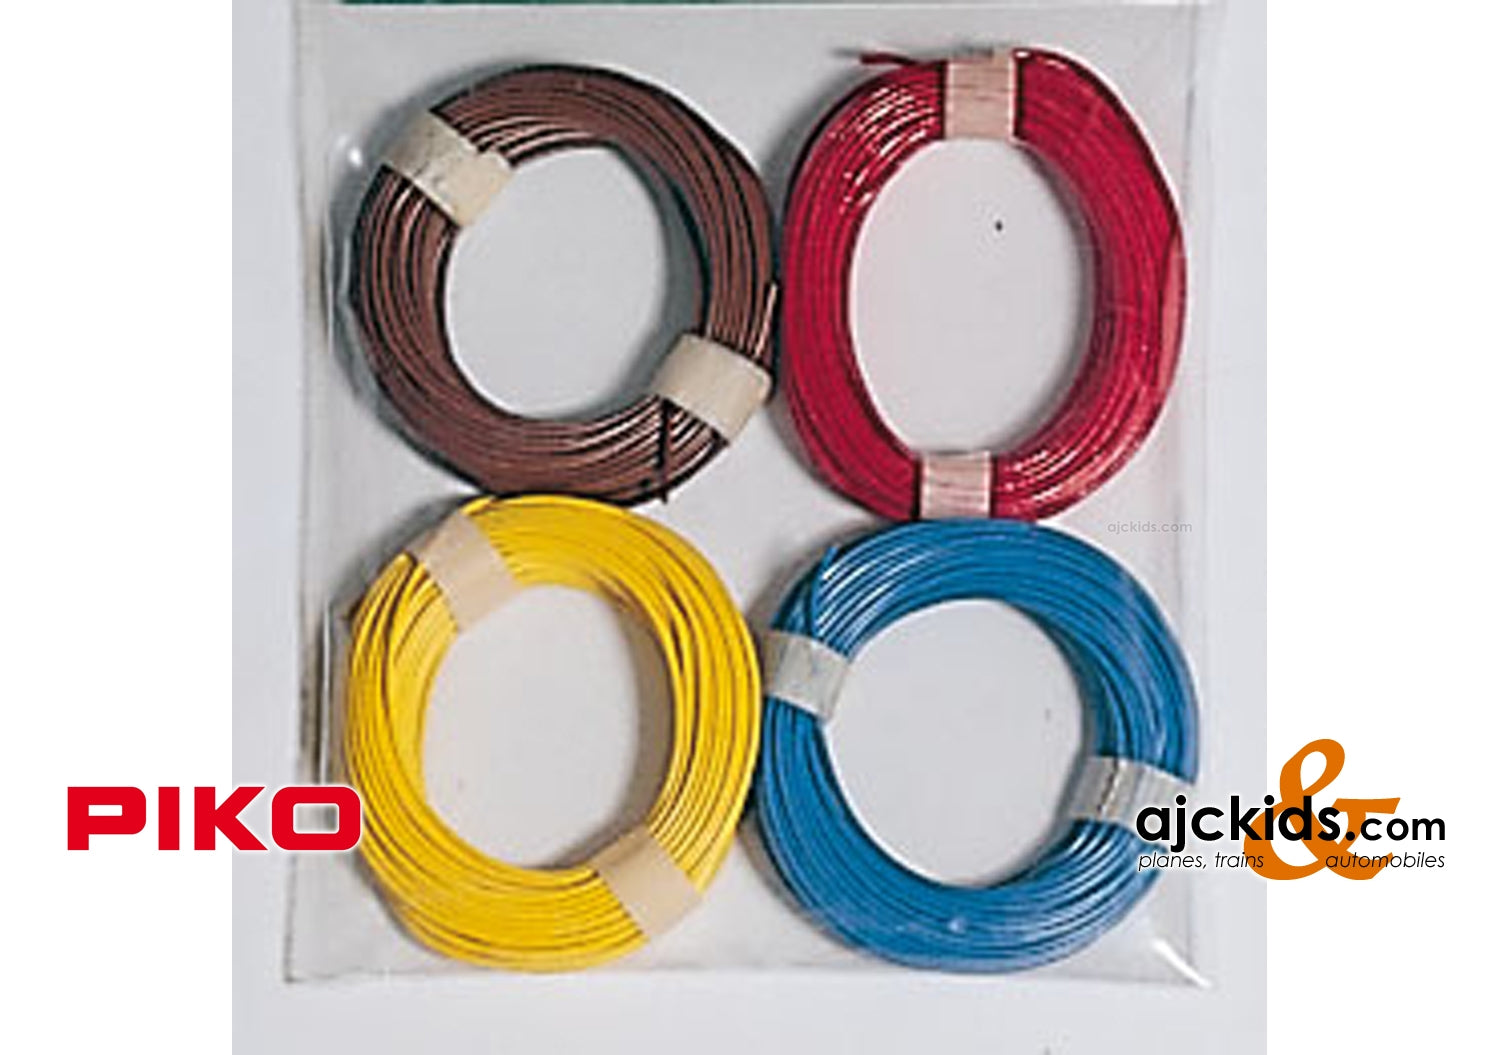 Piko 55775 - Copper Wire 4 Colors 10m each